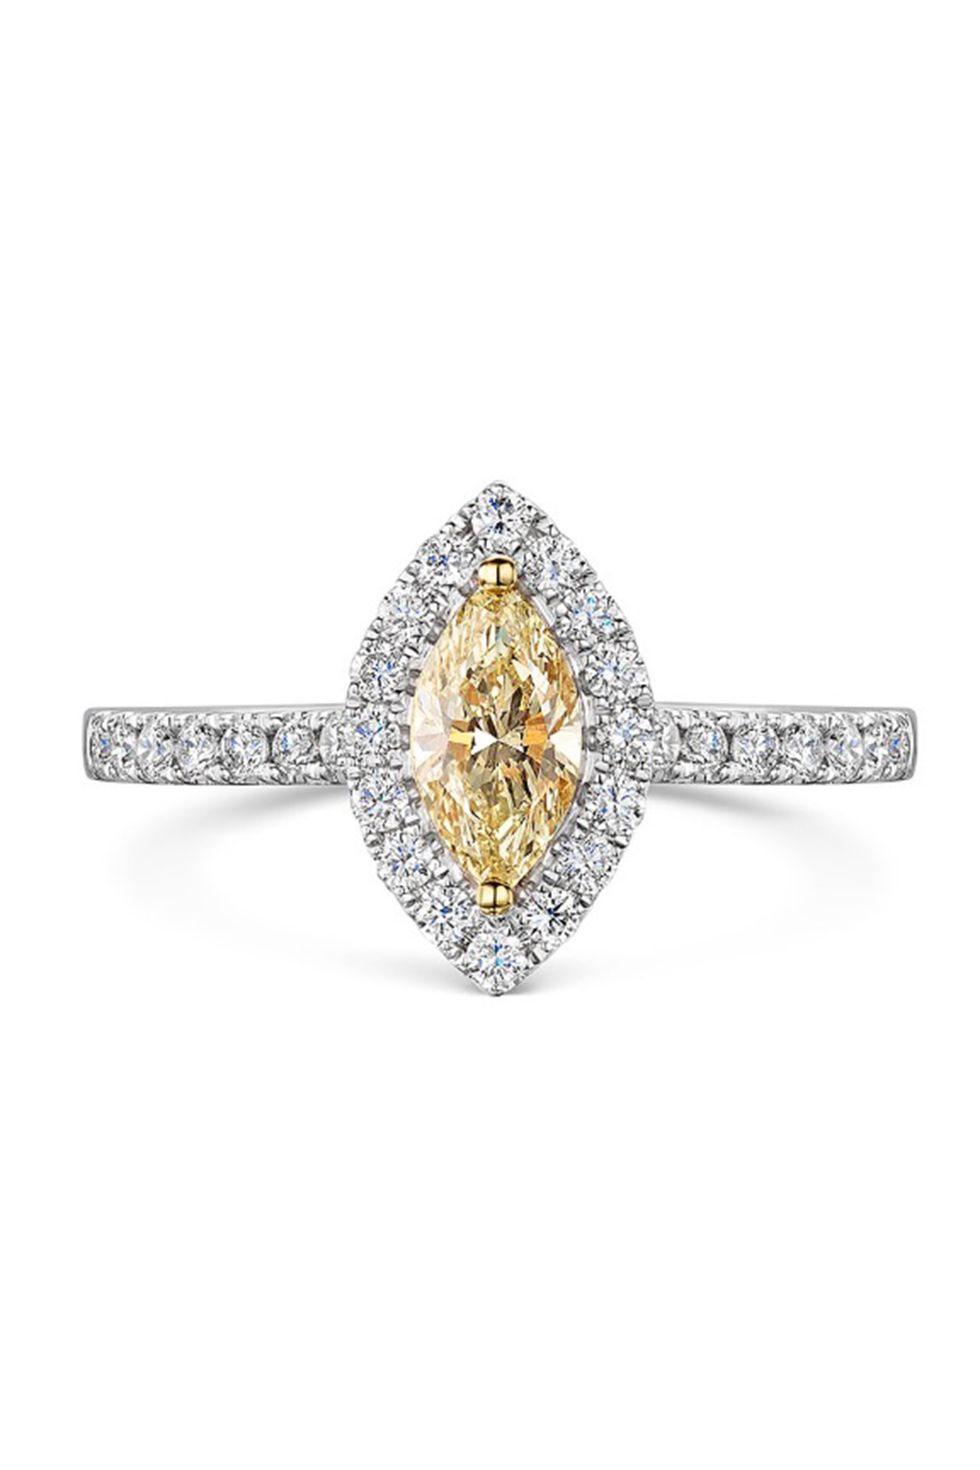 Jewellery, Fashion accessory, Ring, Diamond, Engagement ring, Body jewelry, Pre-engagement ring, Gemstone, Yellow, Platinum, 